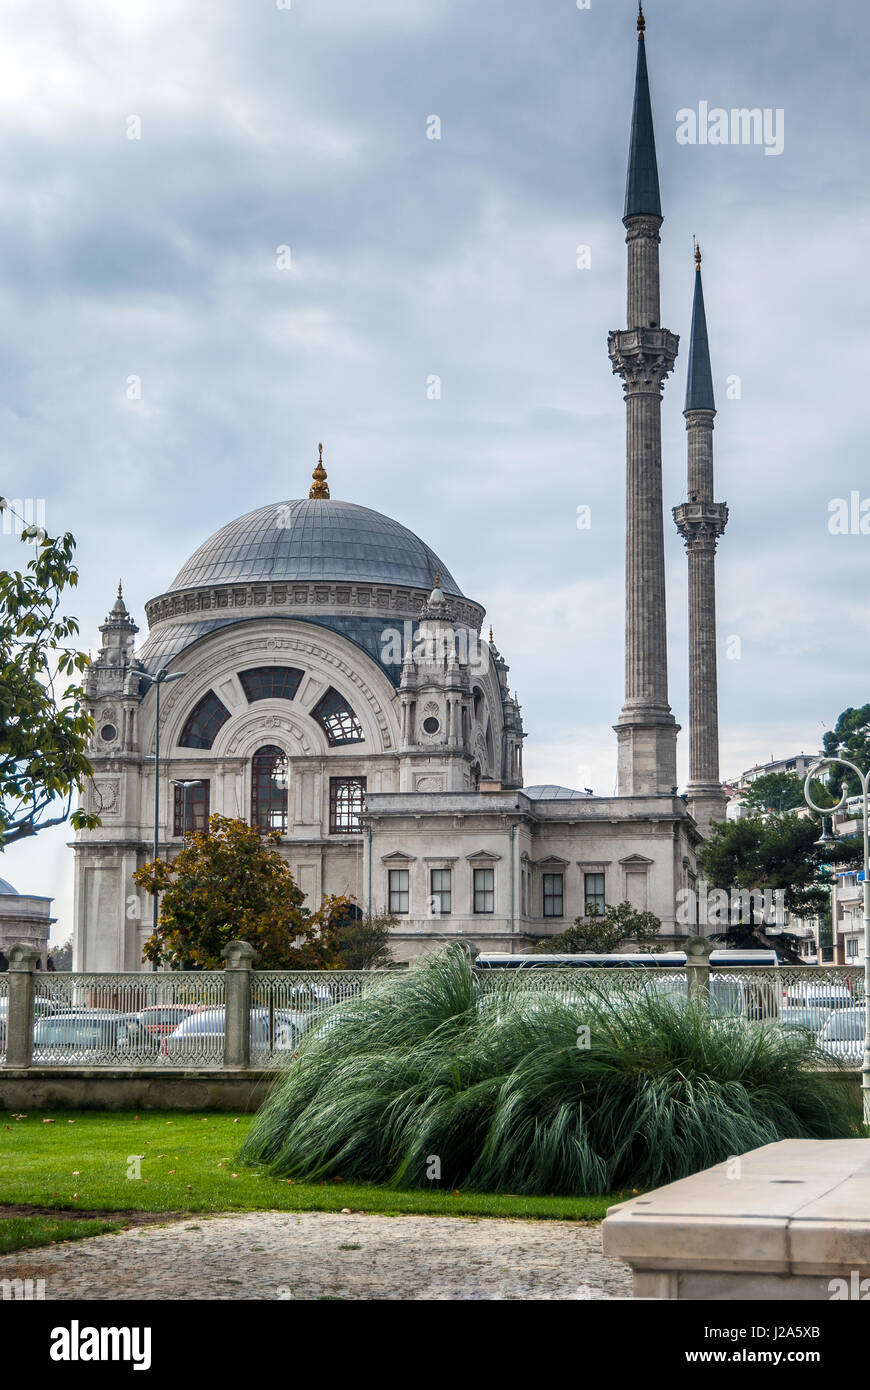 La Moschea Ortakoy (turco: Ortakoy Camii), ufficialmente il Buyuk Mecidiye Camii del sultano Abdulmecid in Besiktas, Istanbul, Turchia Foto Stock